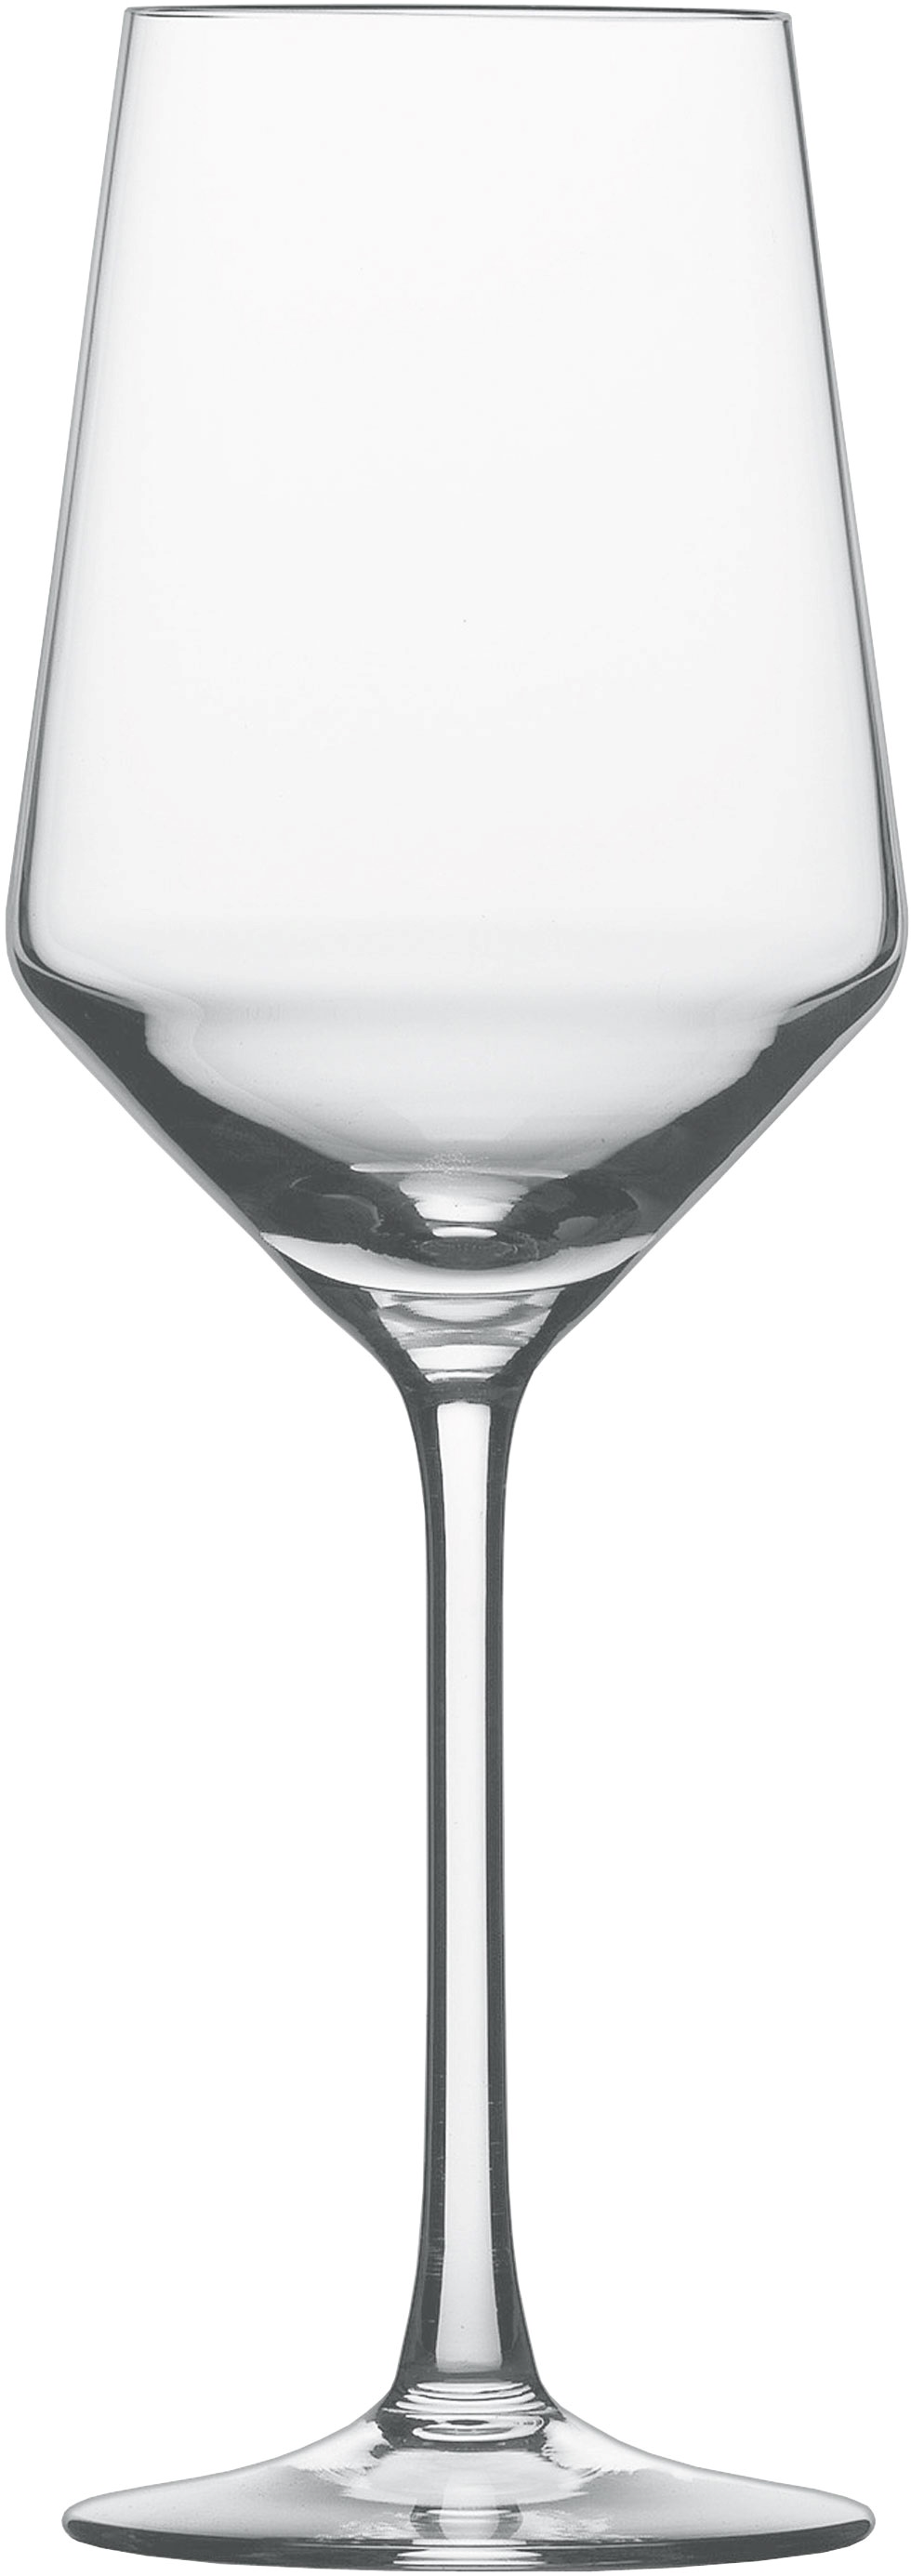 Zwiesel glas, belfesta, kozarec za vino sauvignon blanc, 408 ml, 1 kos